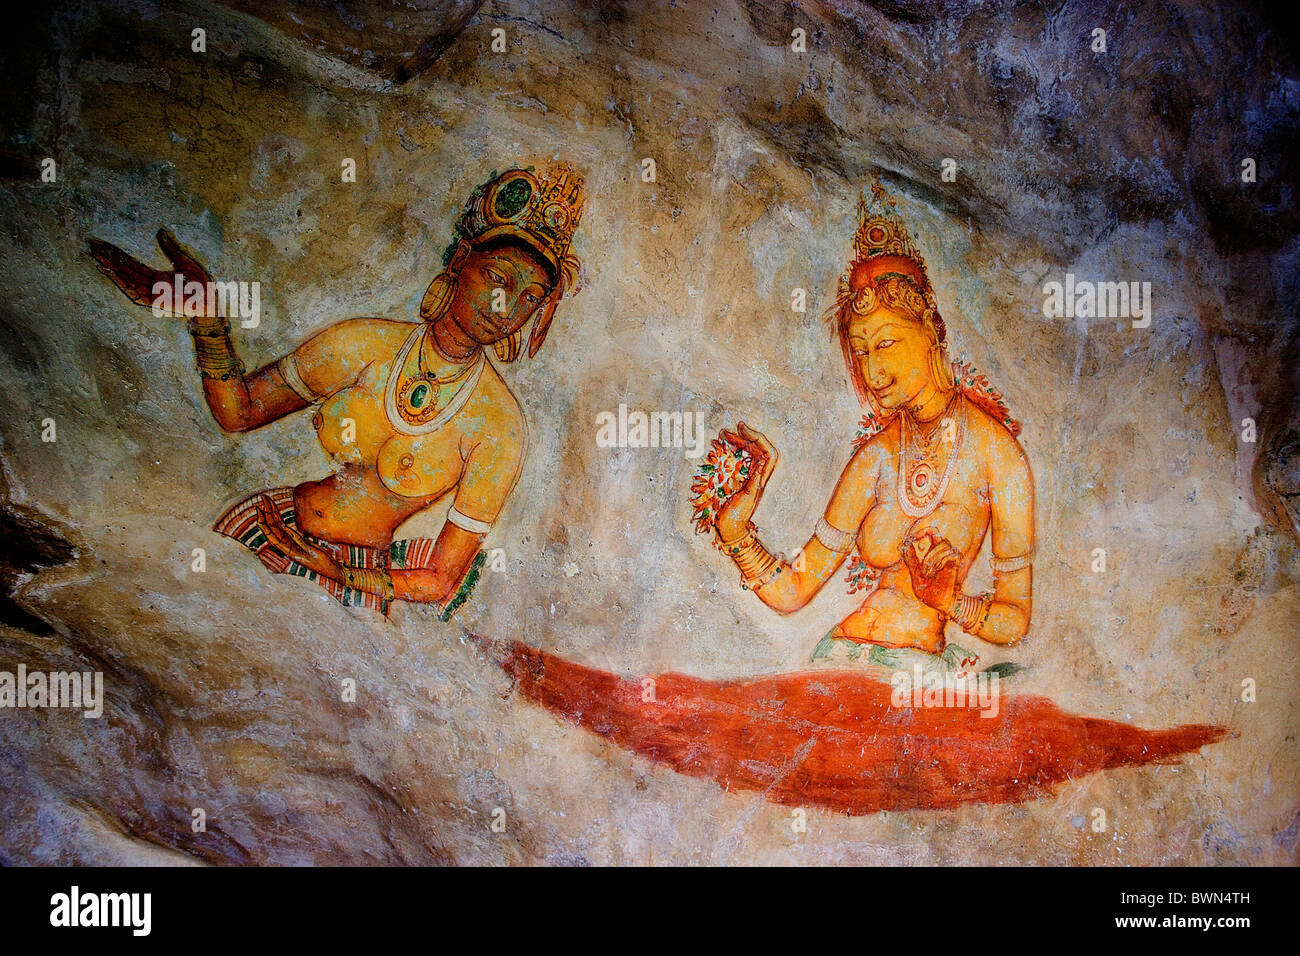 Sri Lanka Asia Sigiriya Stadt antiken Städte UNESCO World Heritage Site Felsenfestung Fresken Freskenmalerei Stockfoto